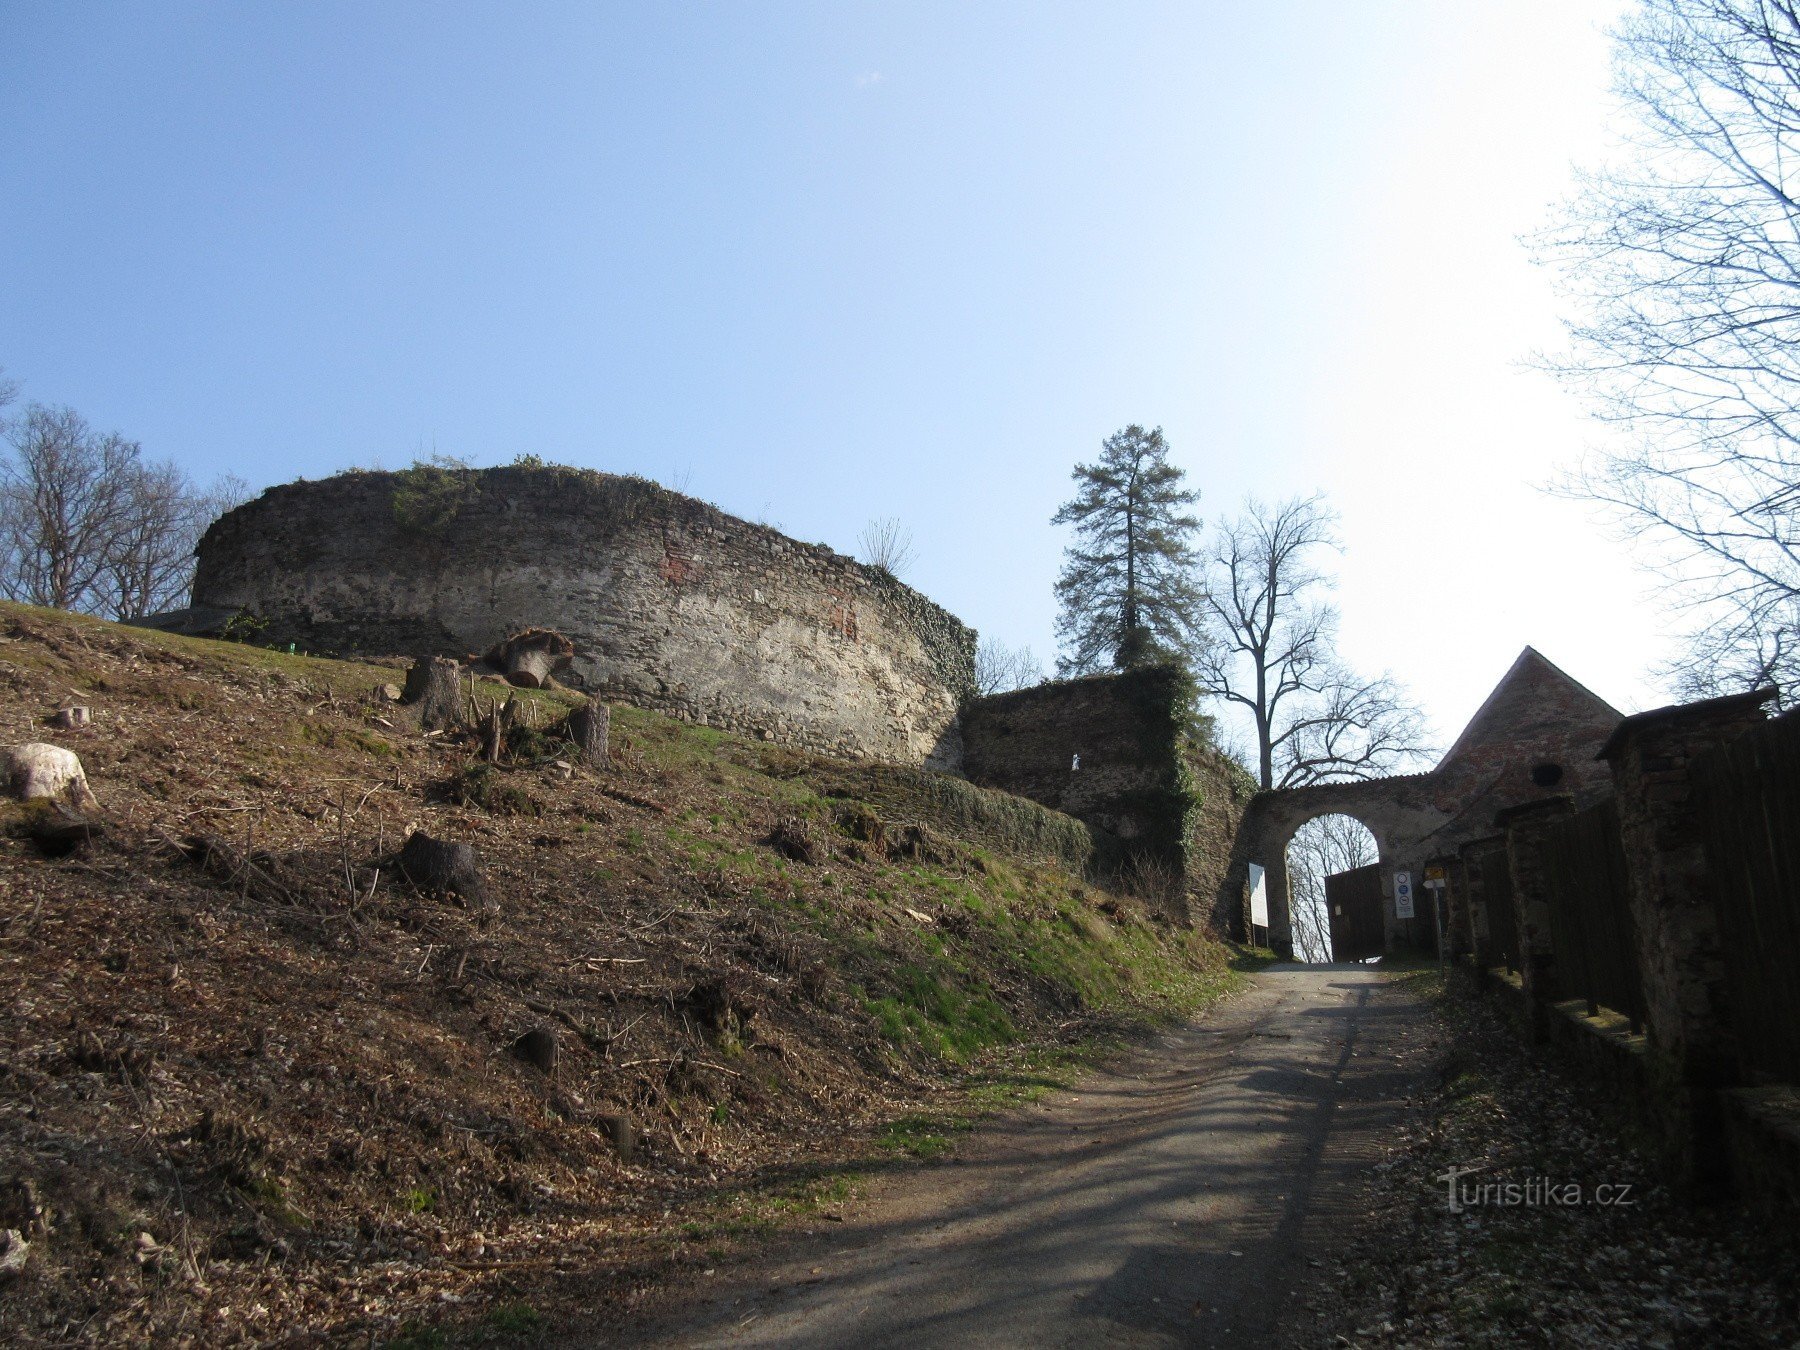 Ao longo de trilhas educacionais para o Castelo de Pernštejn